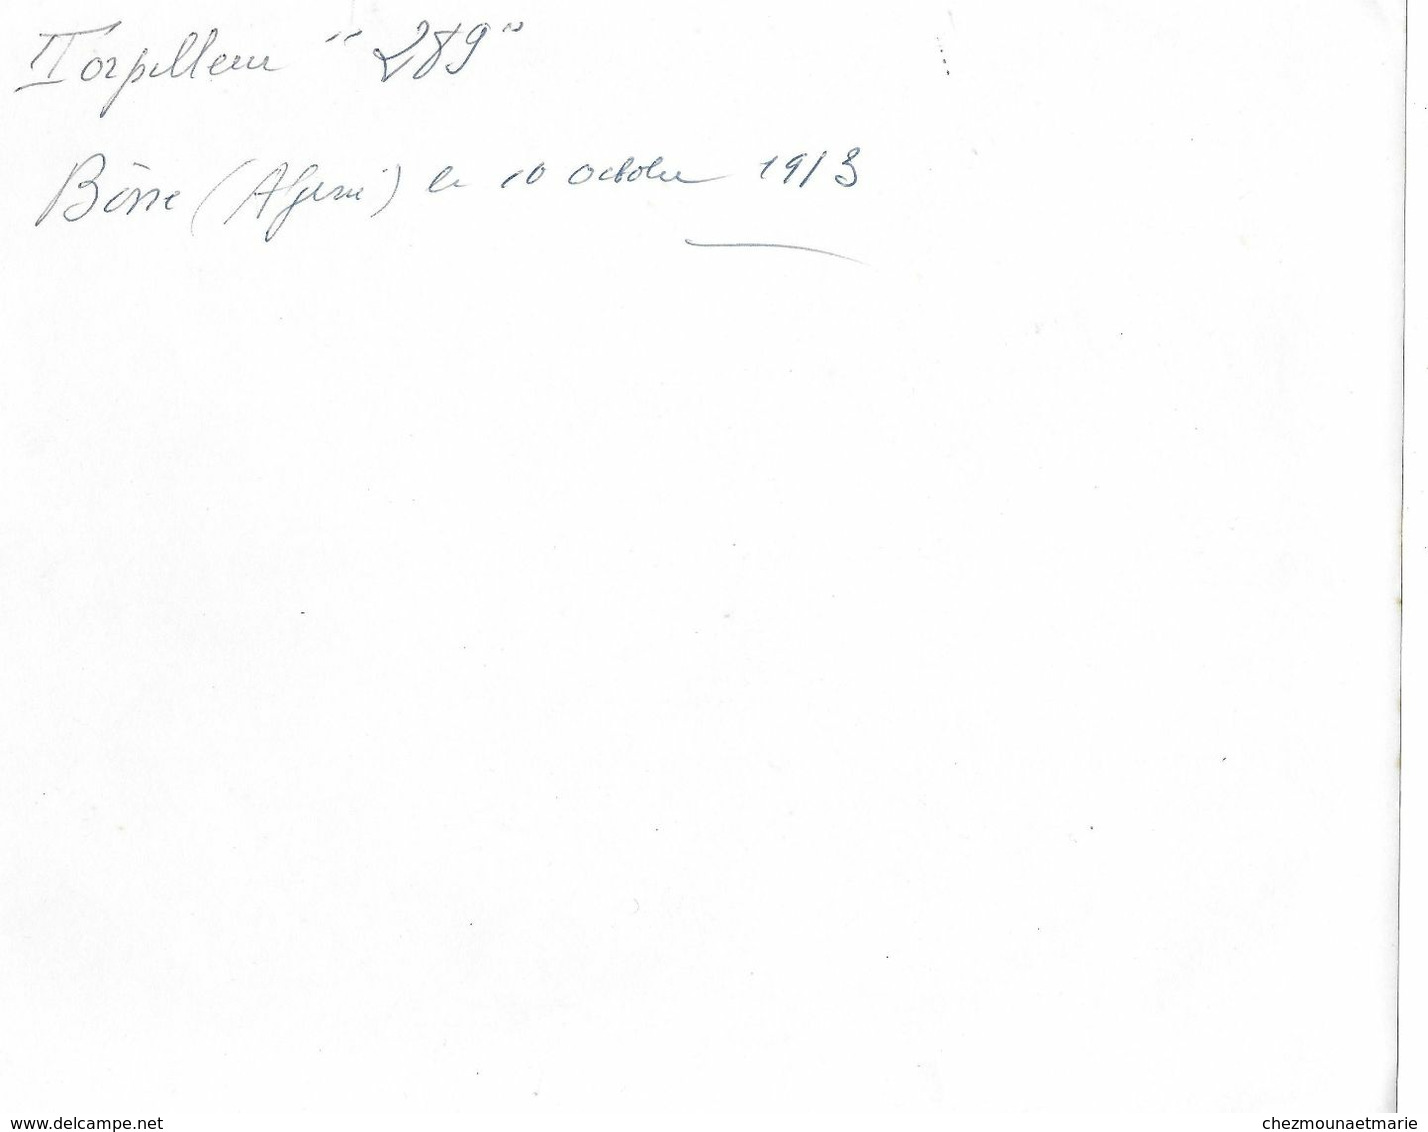 TORPILLEUR 289 BONE ALGERIE OCTOBRE 1913 - PHOTO - Schiffe